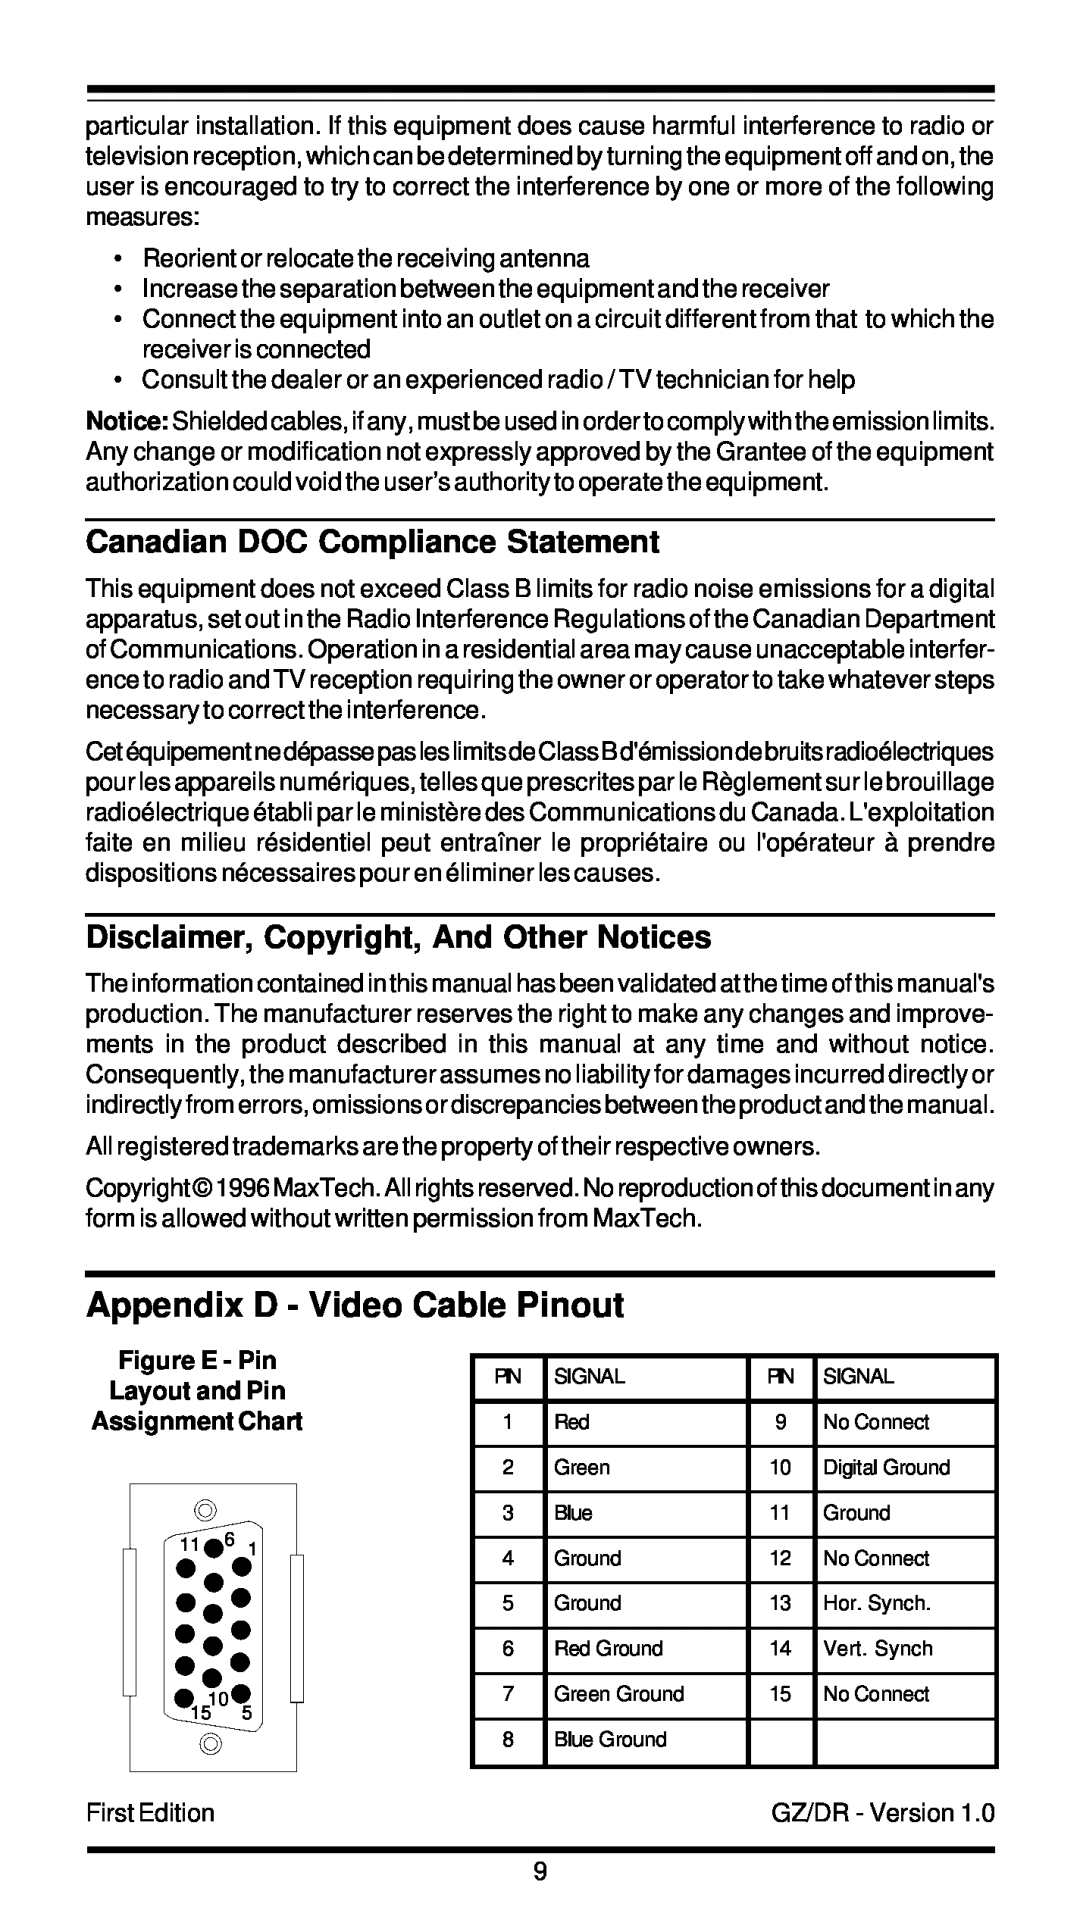 MaxTech XT7800 user manual Appendix D - Video Cable Pinout, Canadian DOC Compliance Statement 